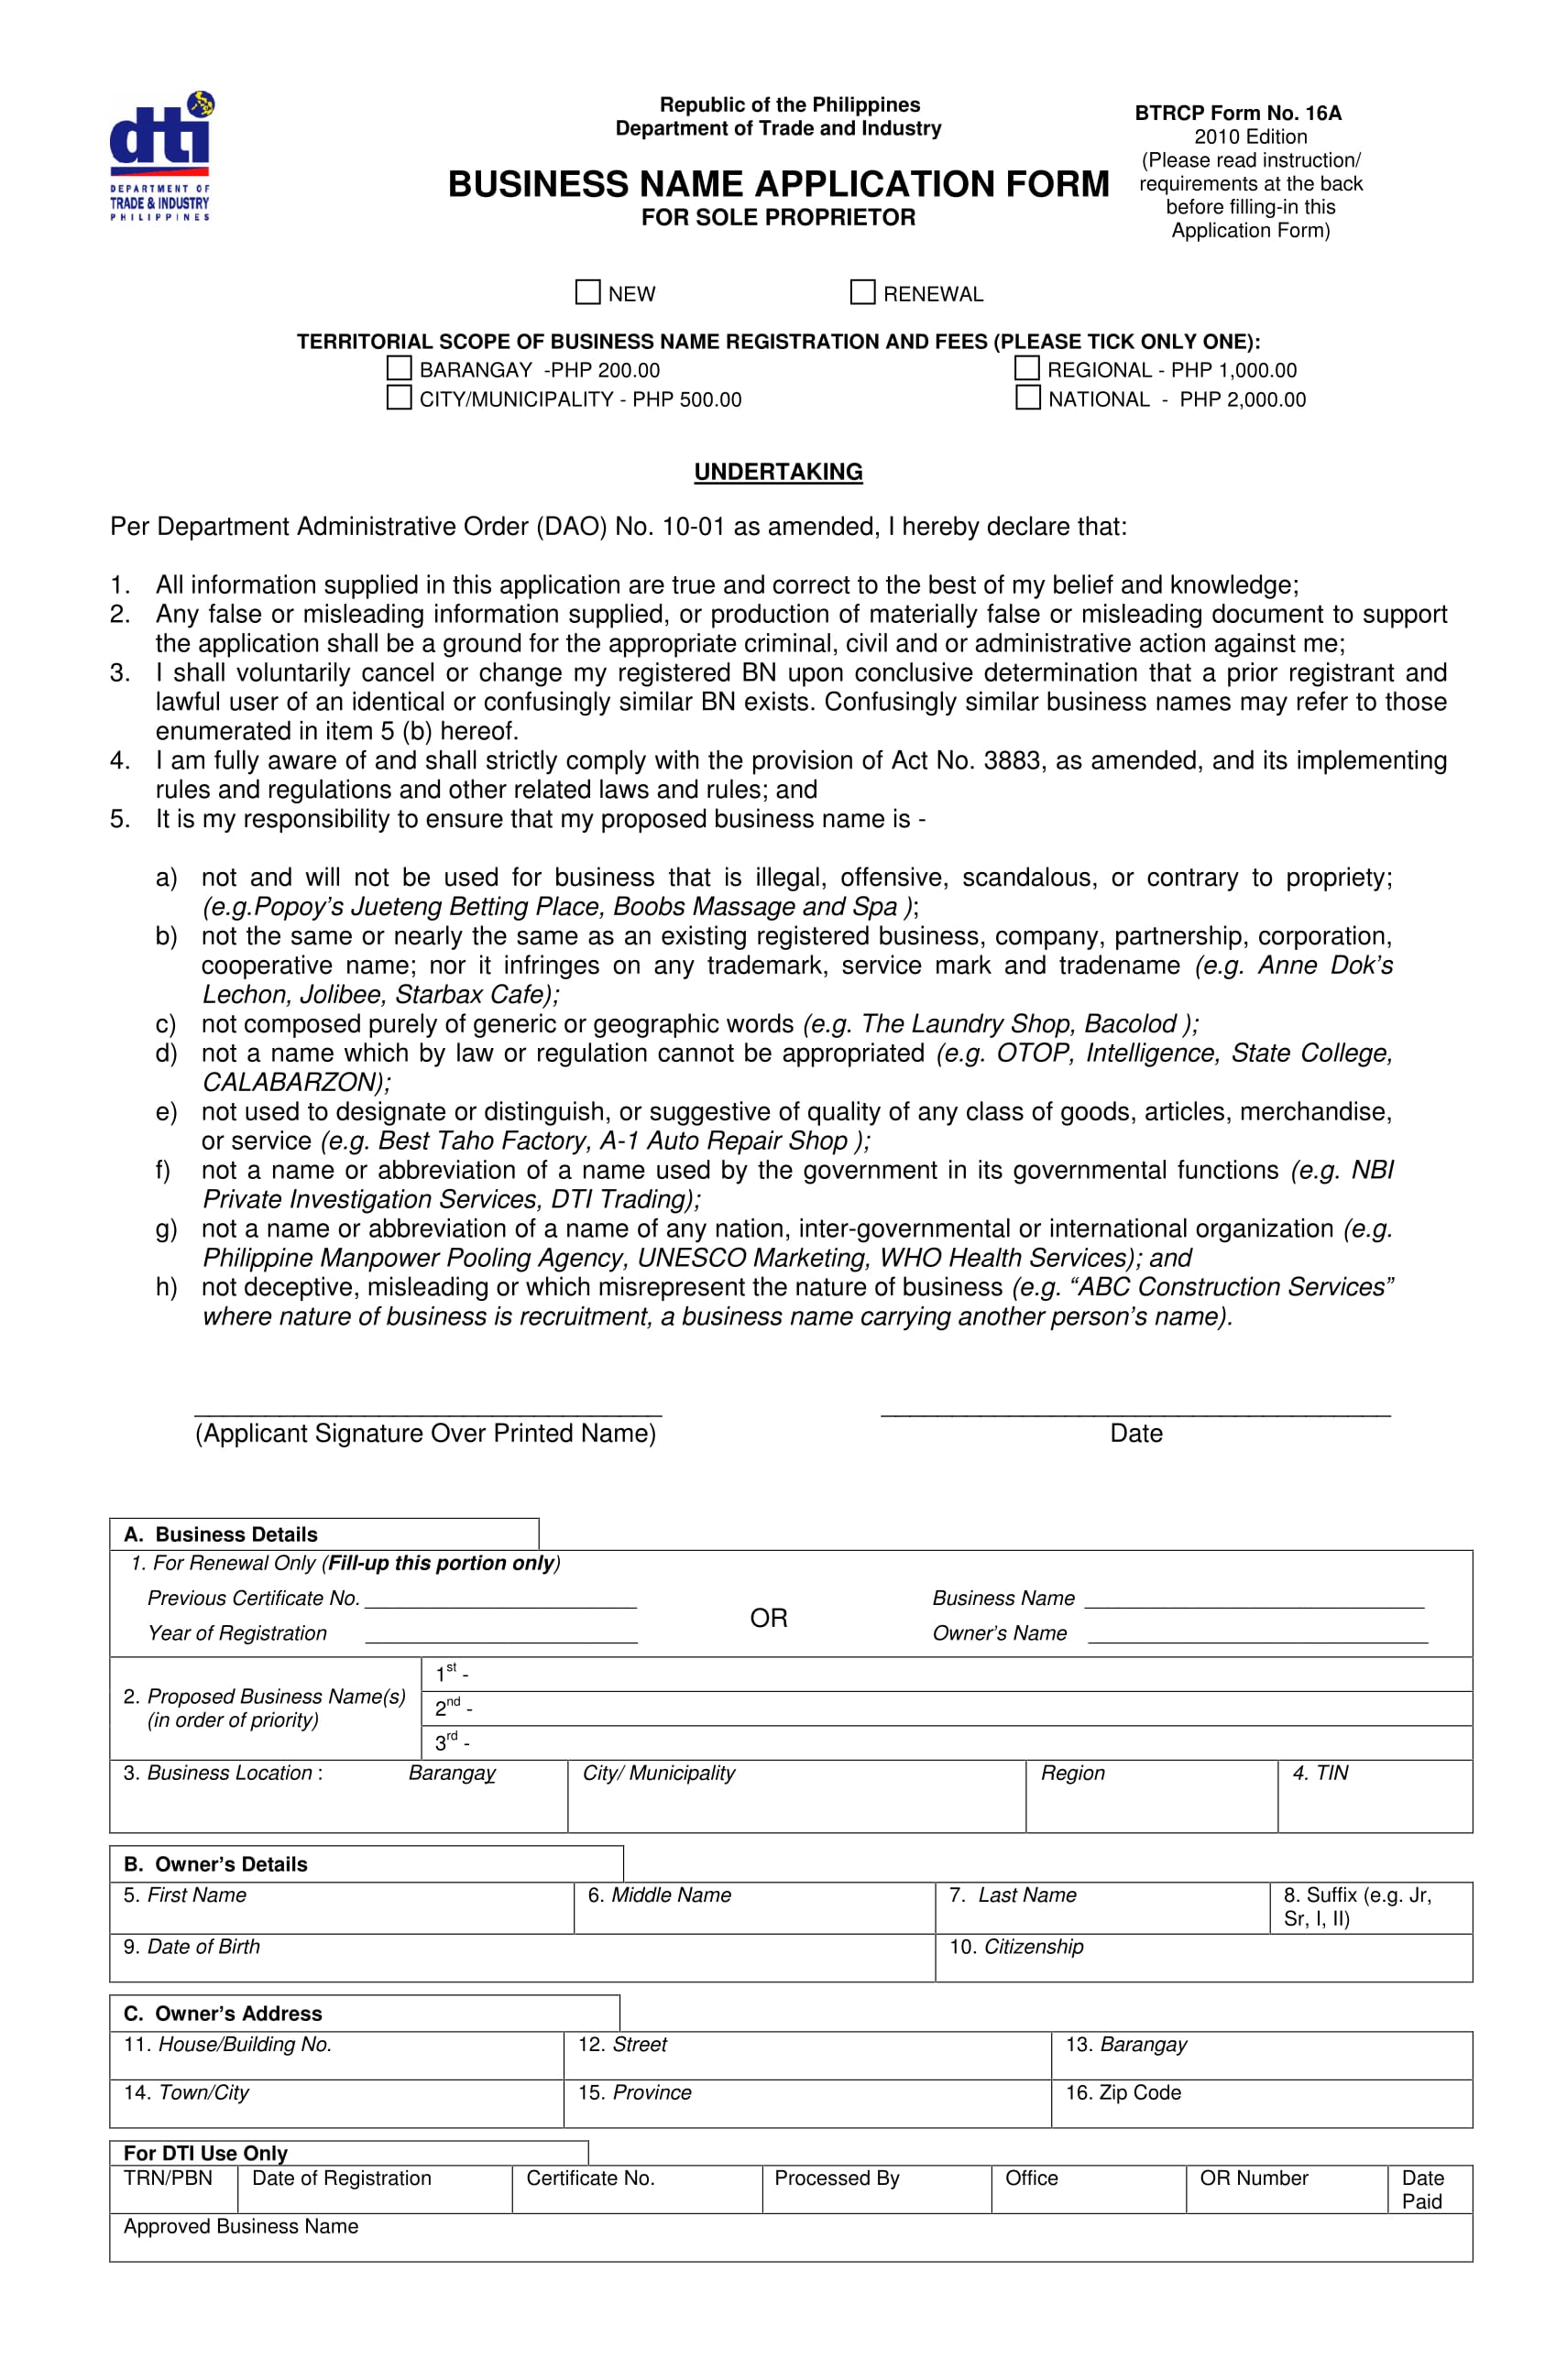 dti business name registration form 1